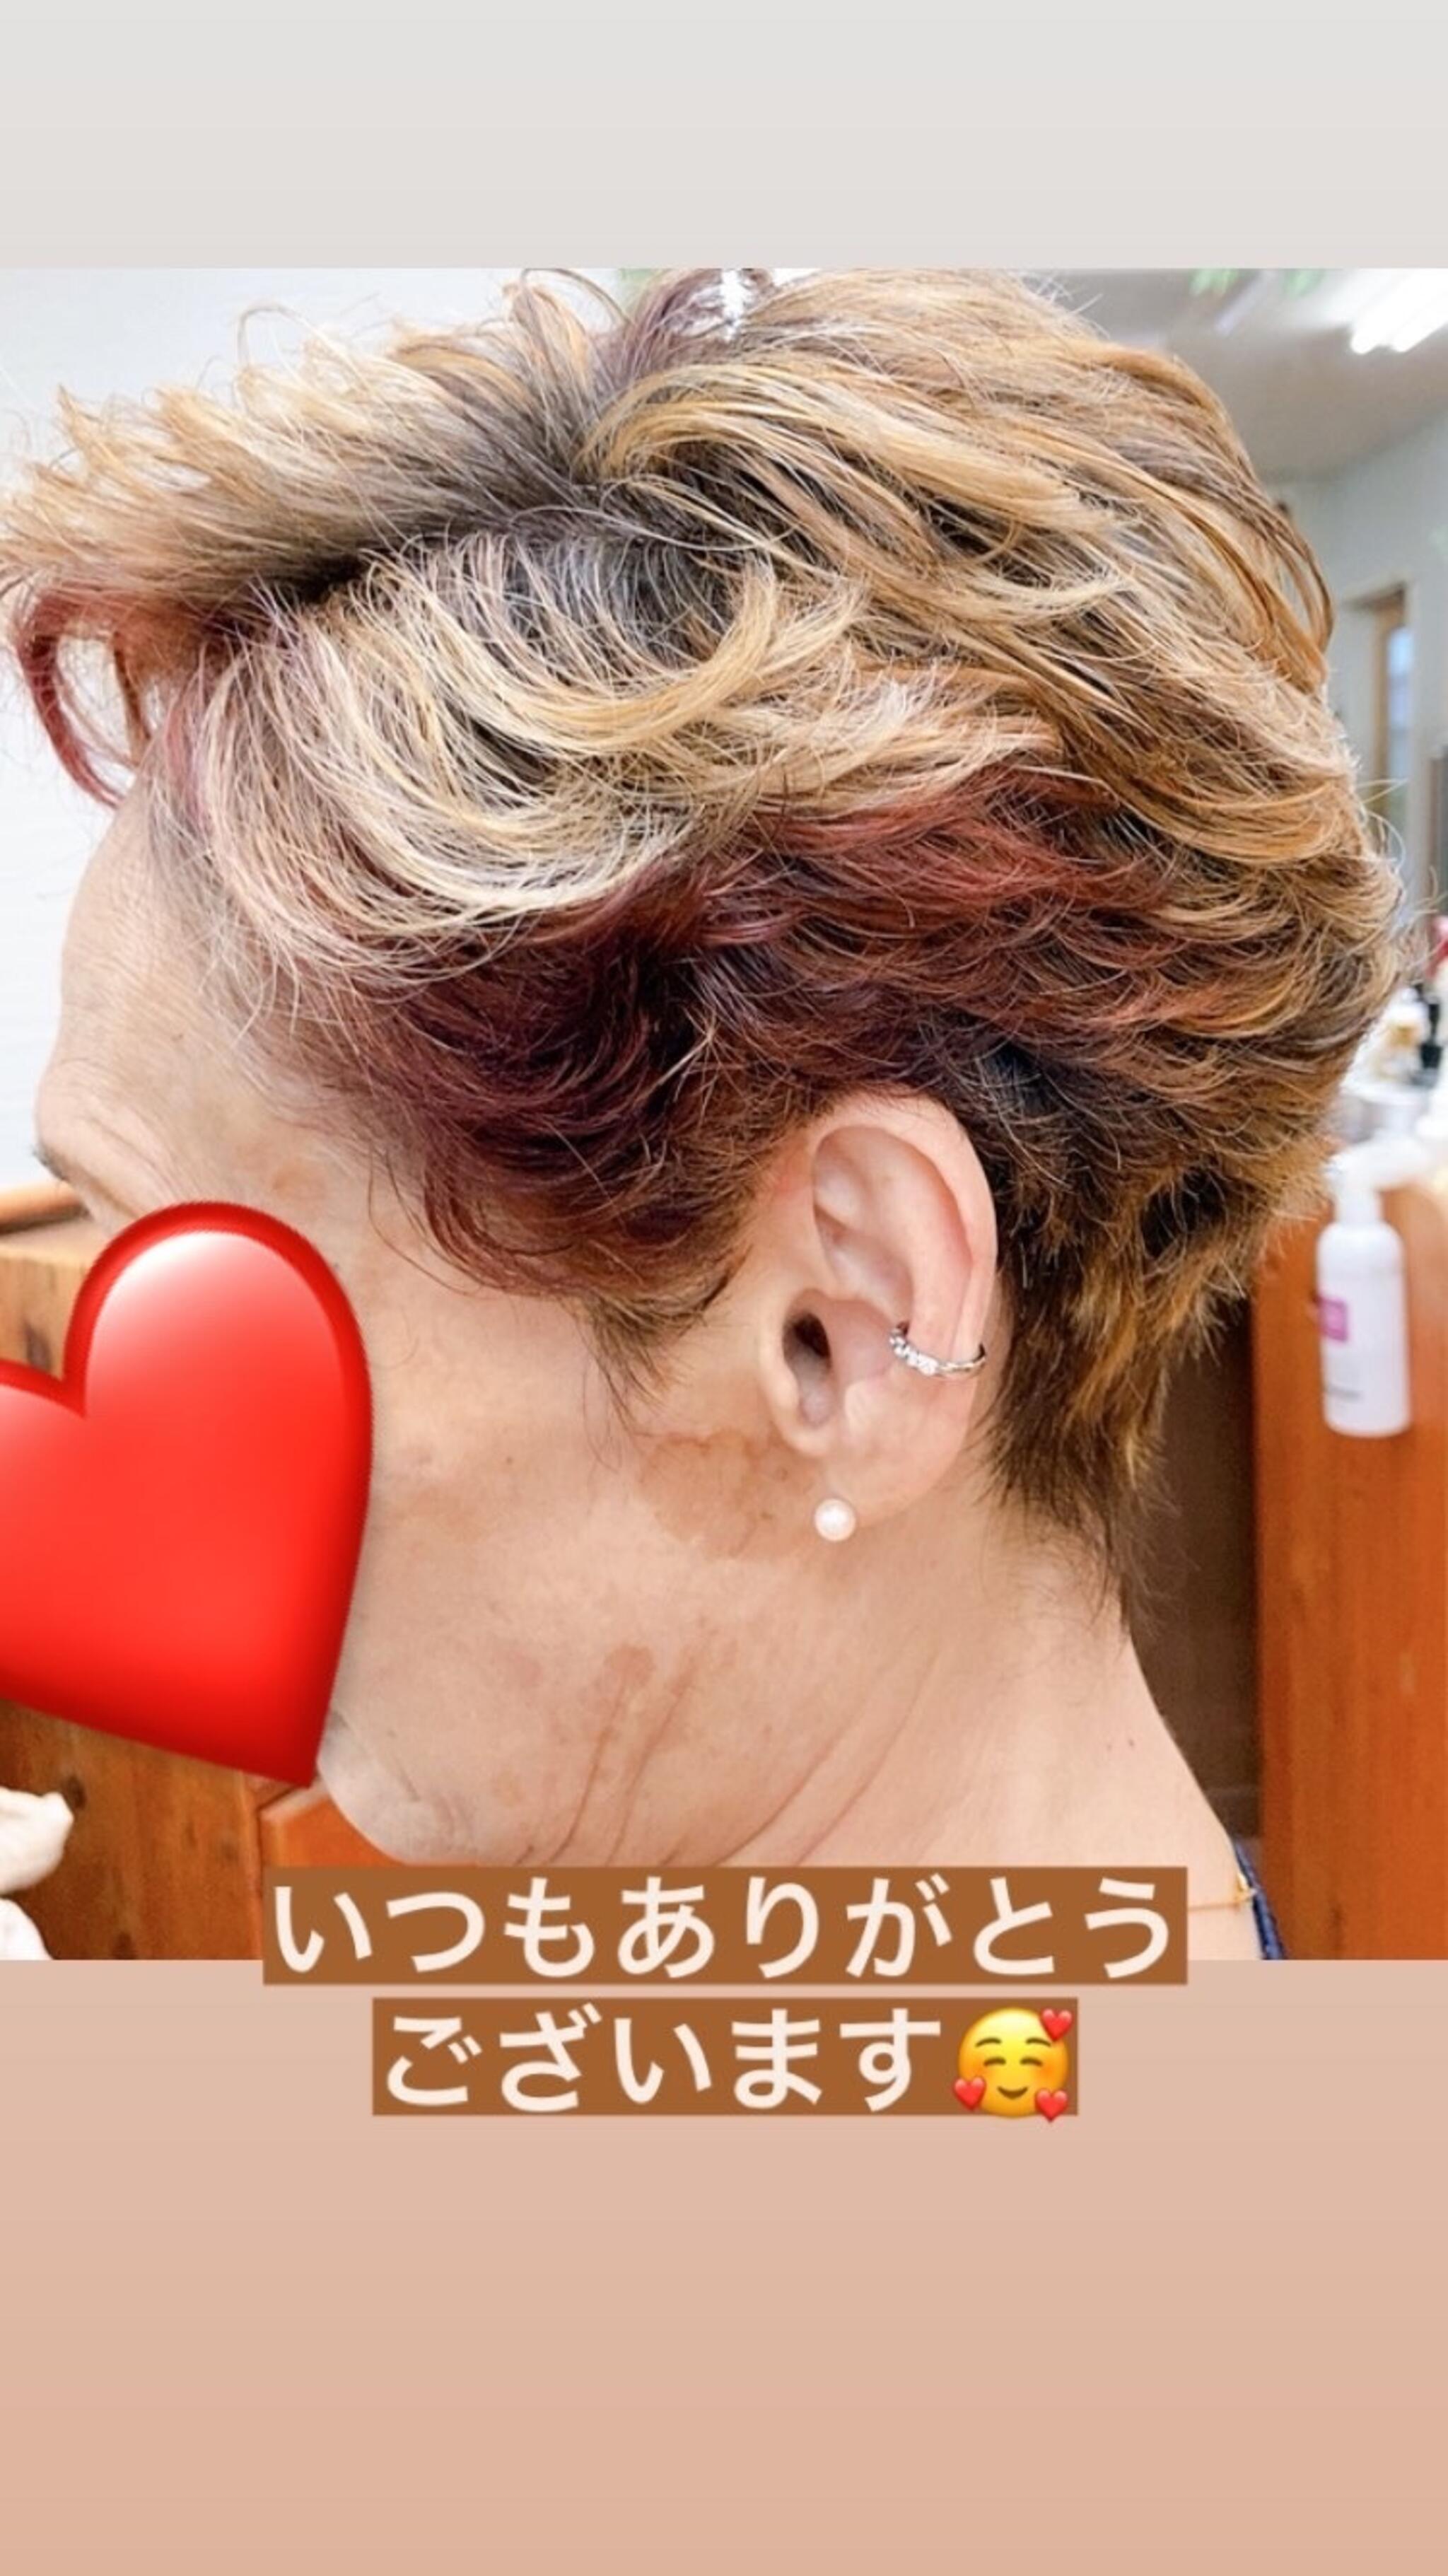 Michiko hair and spaの代表写真4